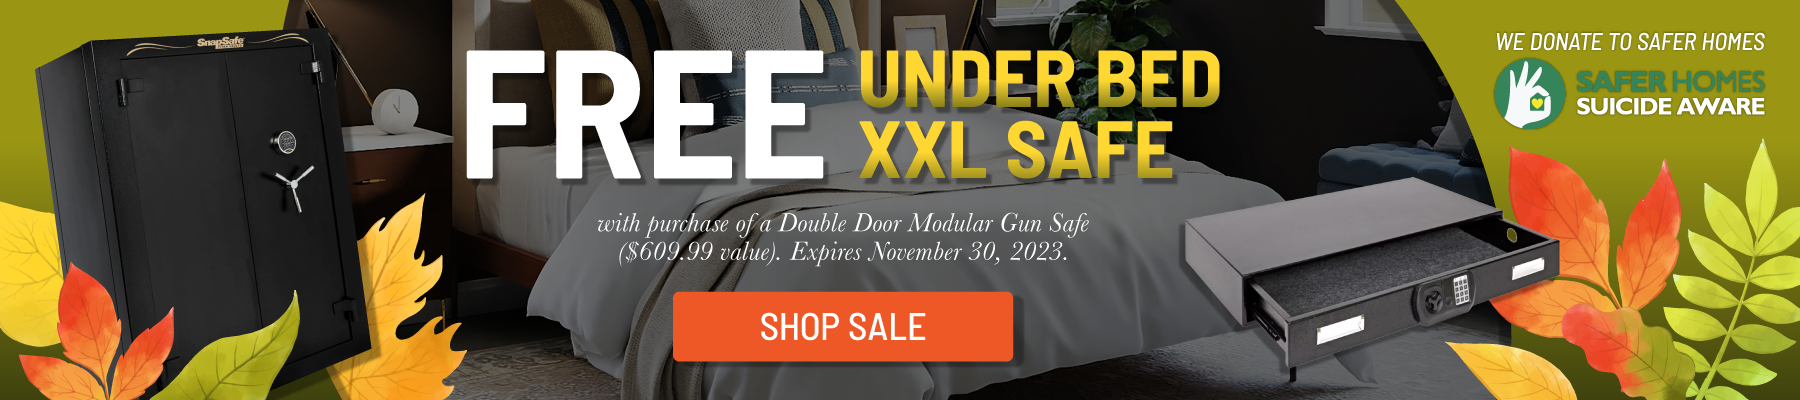 SnapSafe Free Under Bed XXL Safe